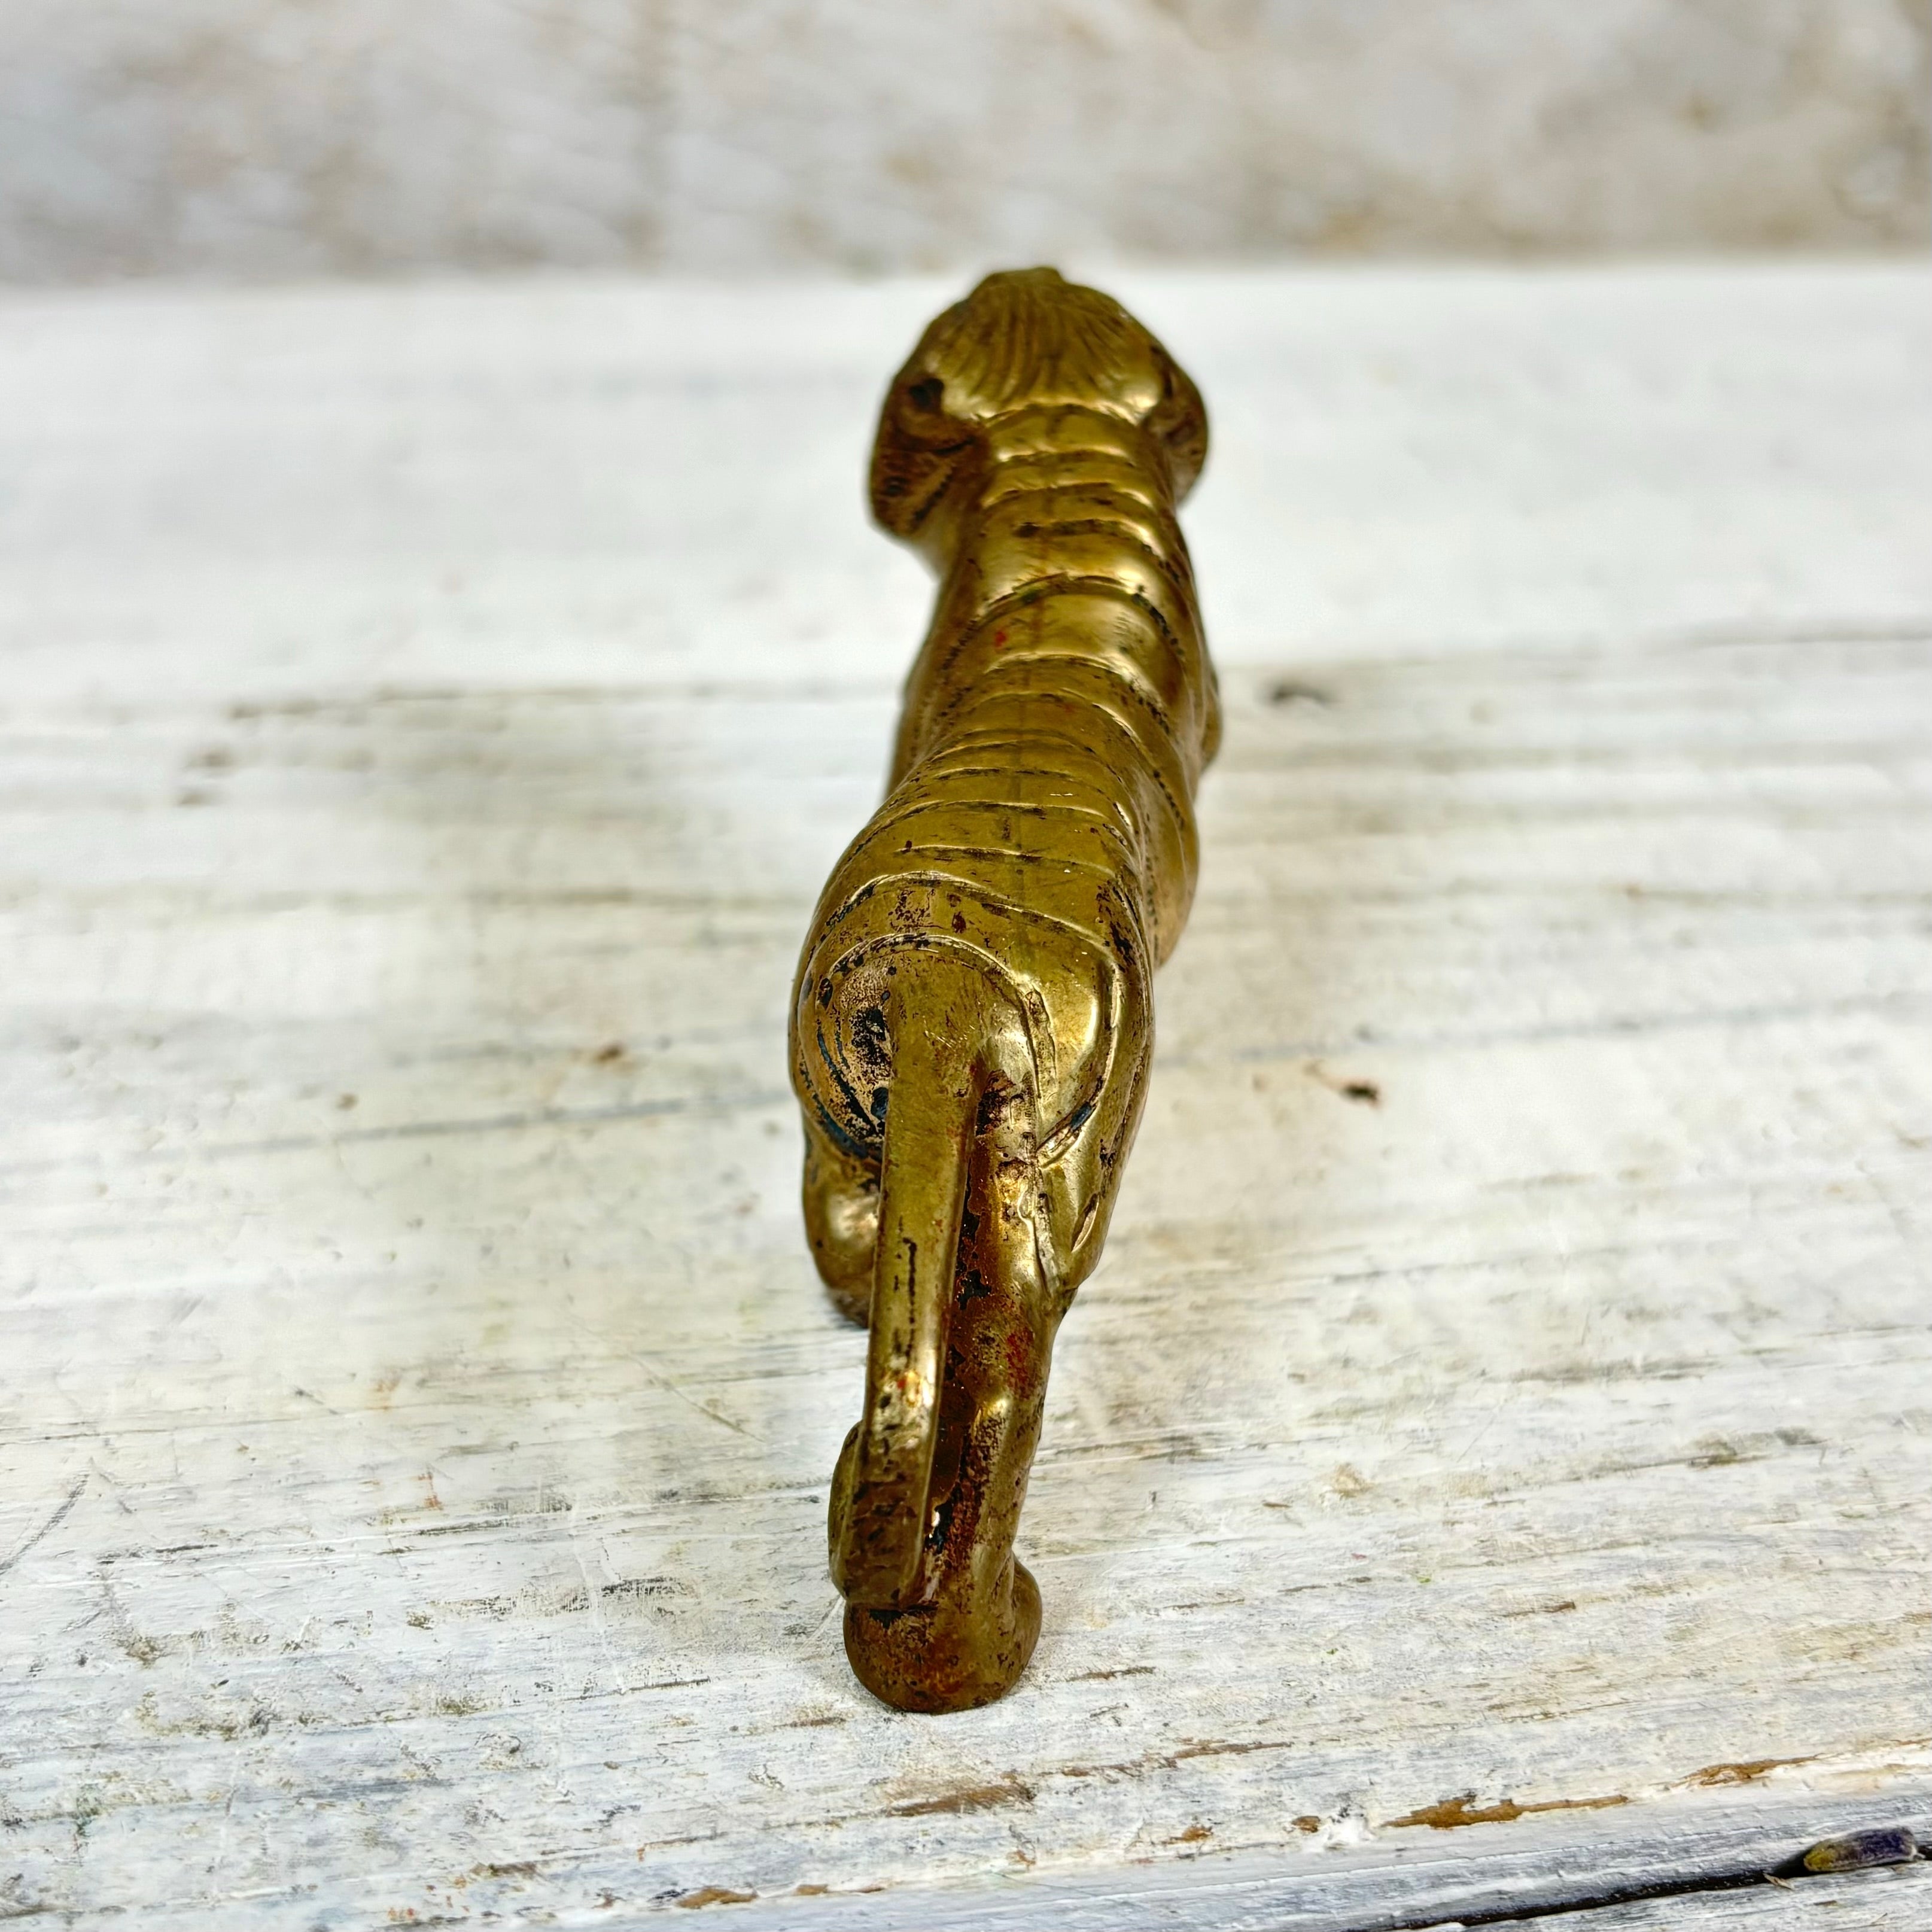 Small Vintage Brass Tiger